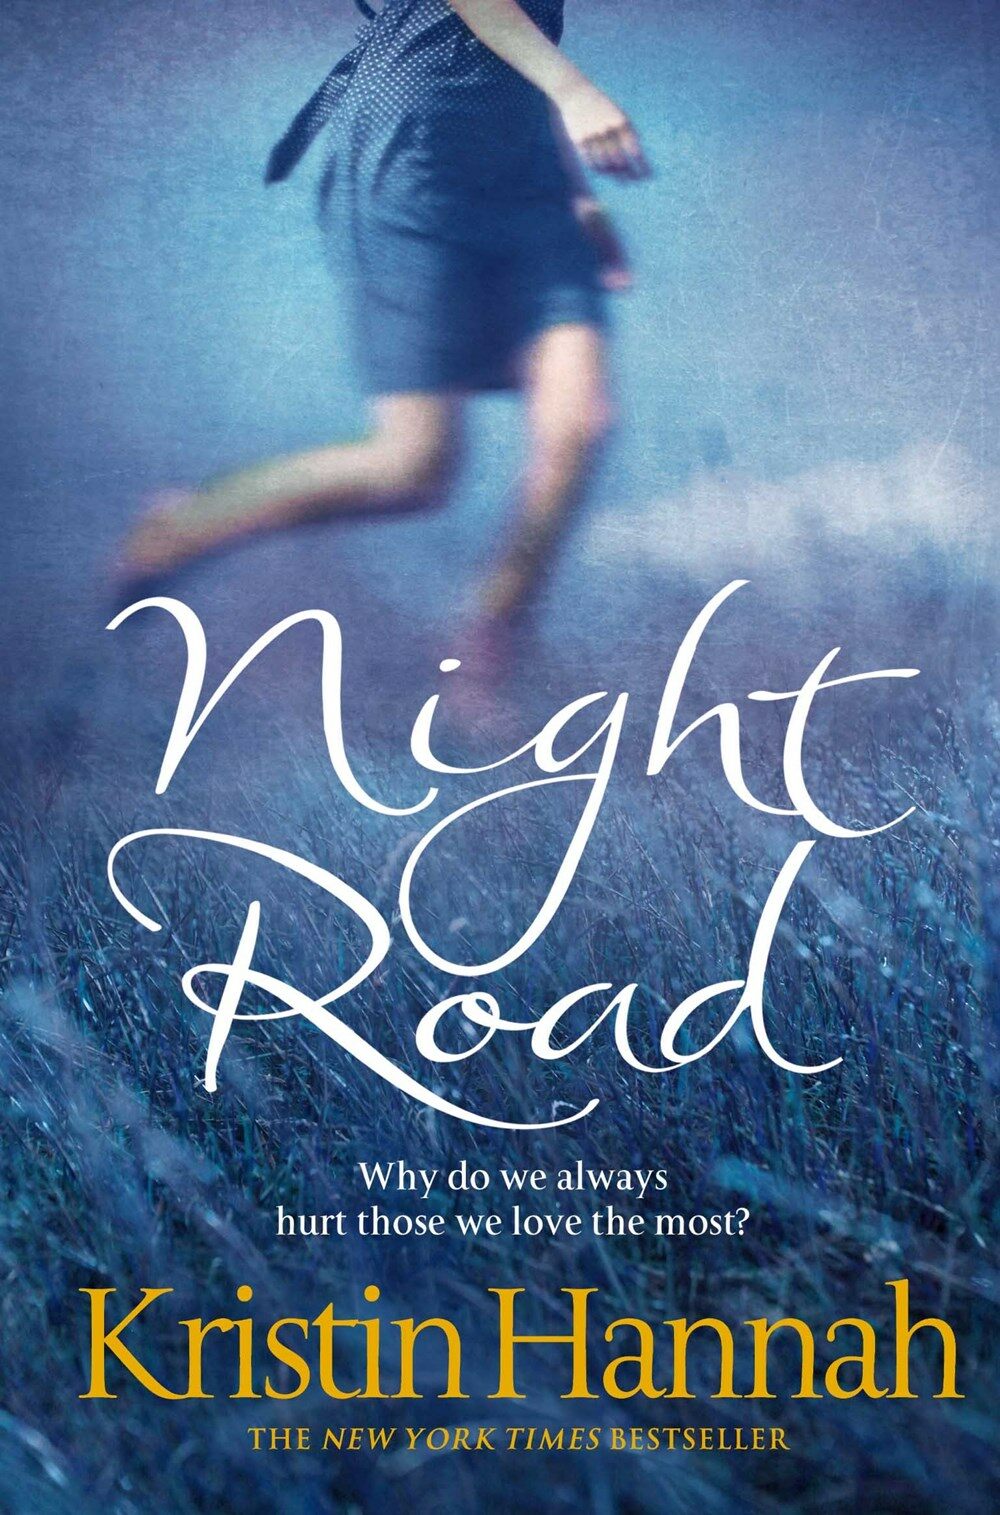 Night Road (Paperback)